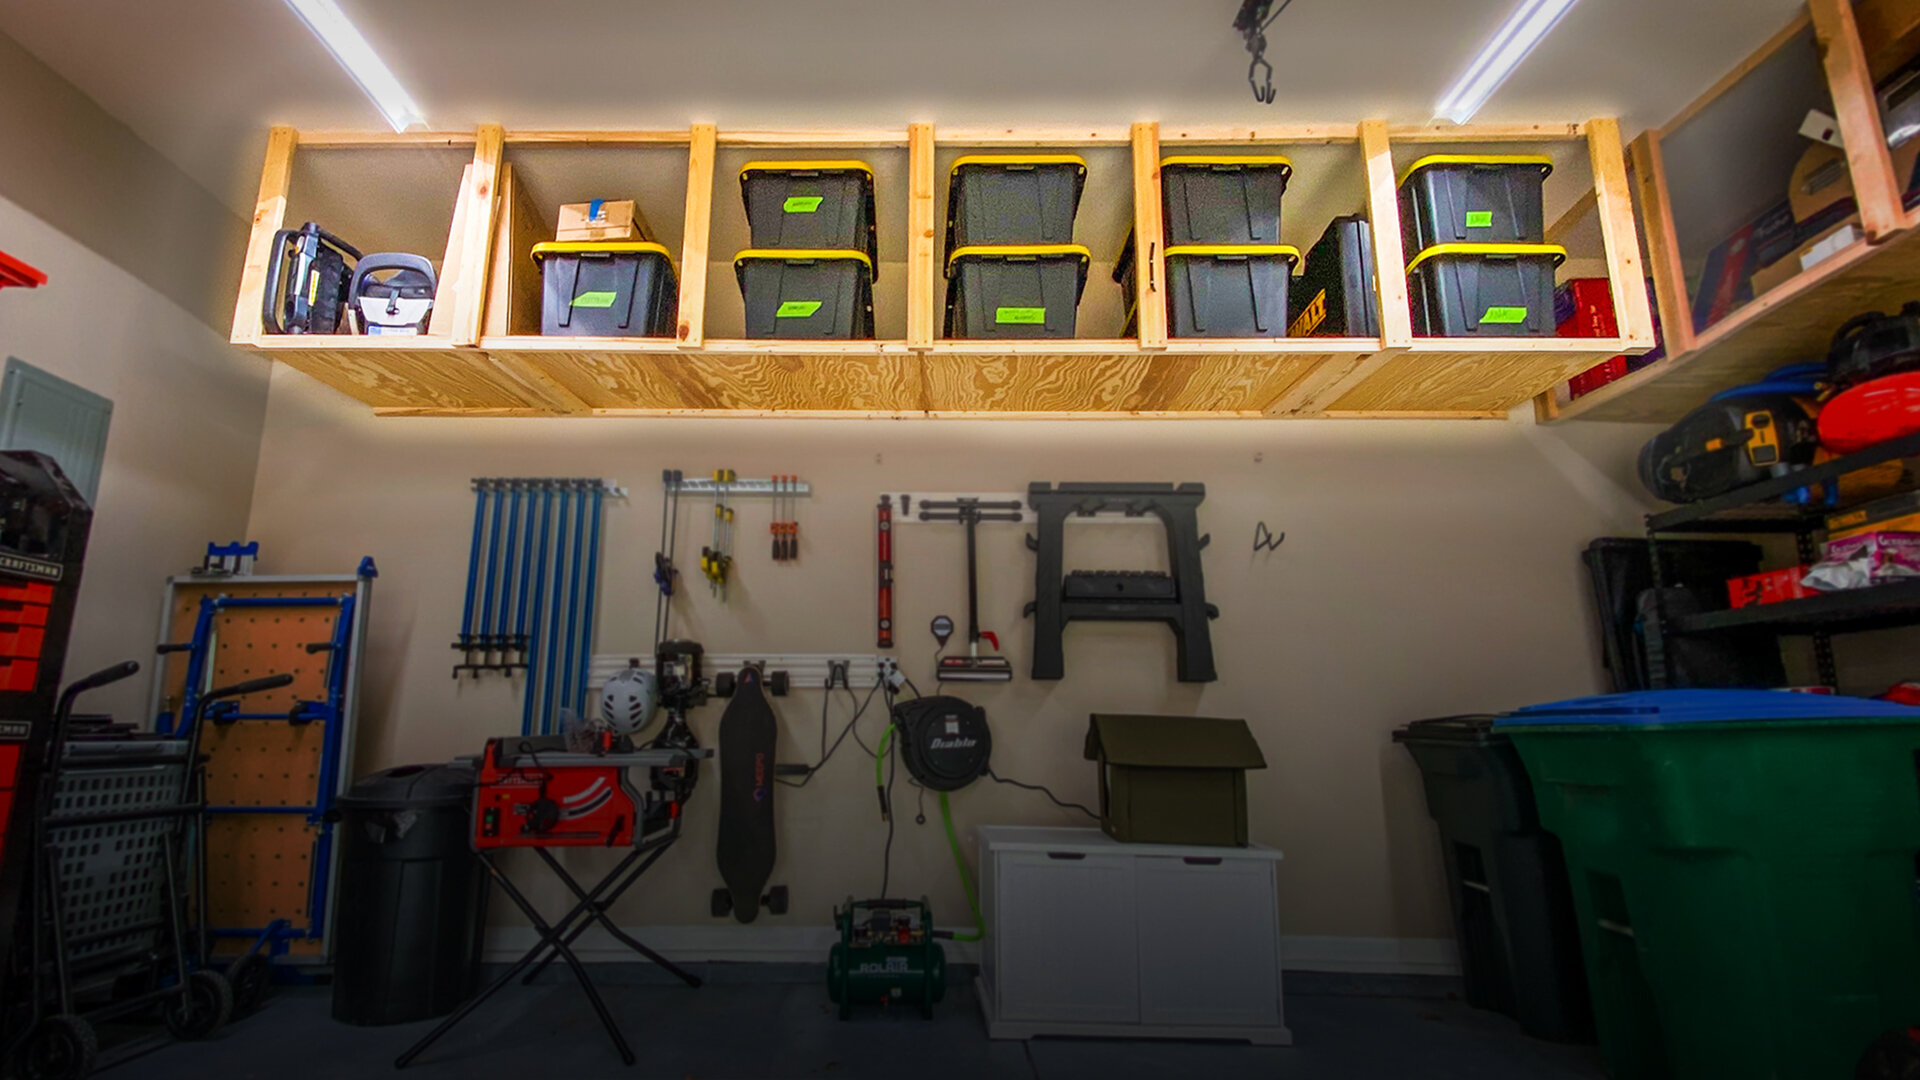 How To Build Diy Garage Storage Shelves, Do It Yourself Garage Shelves